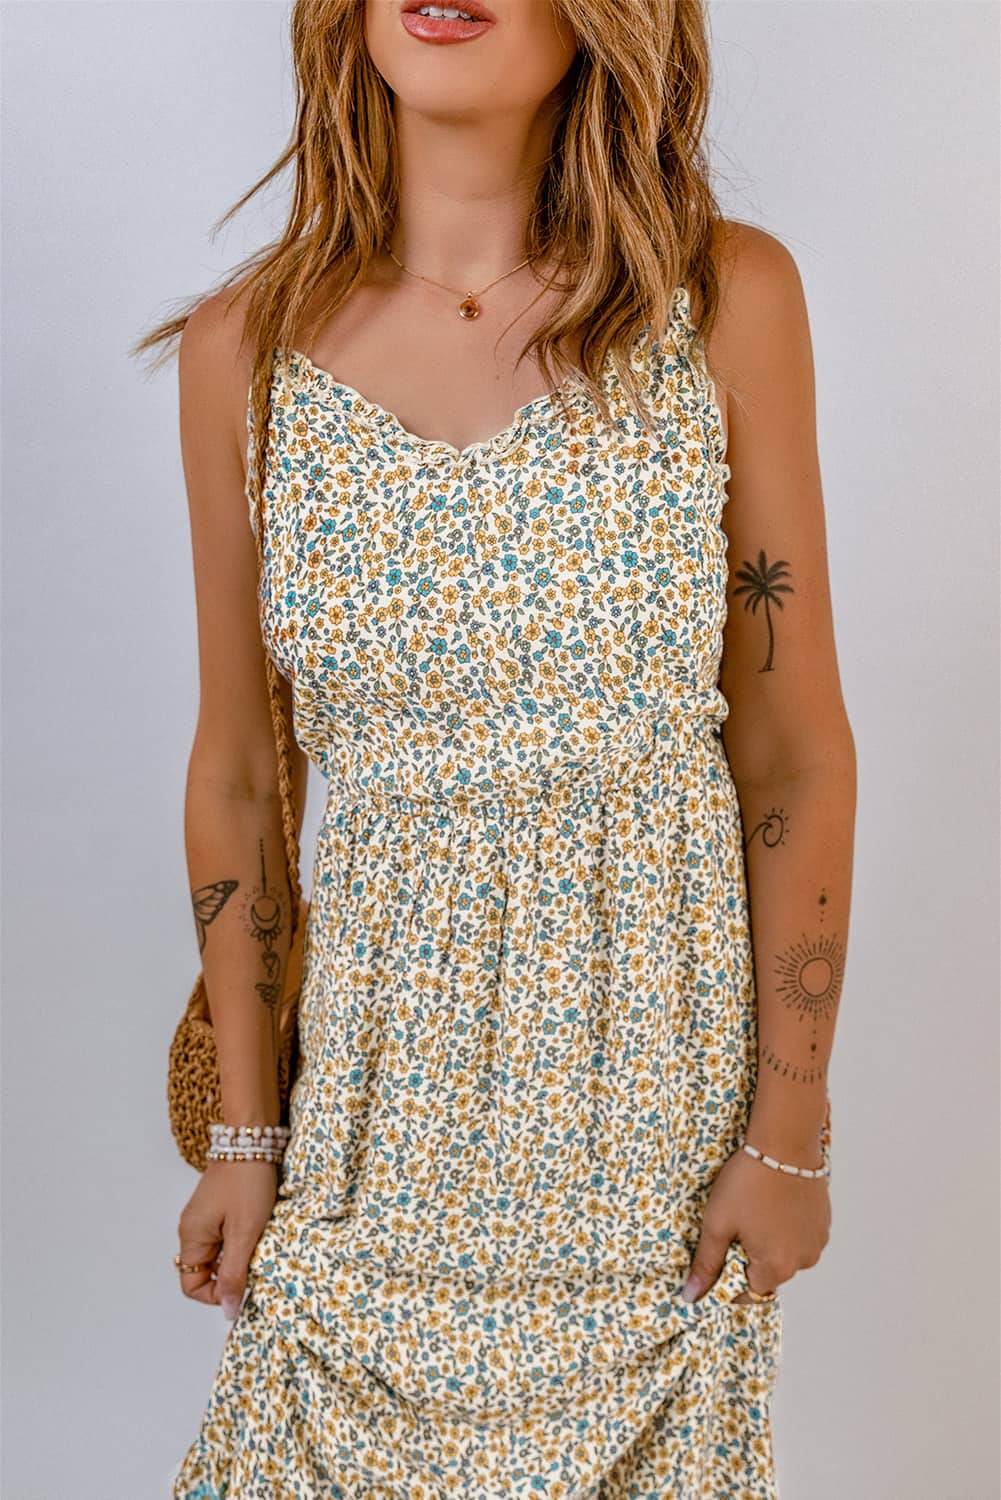 Bohemian Maxi Dress with Spaghetti Straps - Summer Beach Wedding Guest Dress for Women